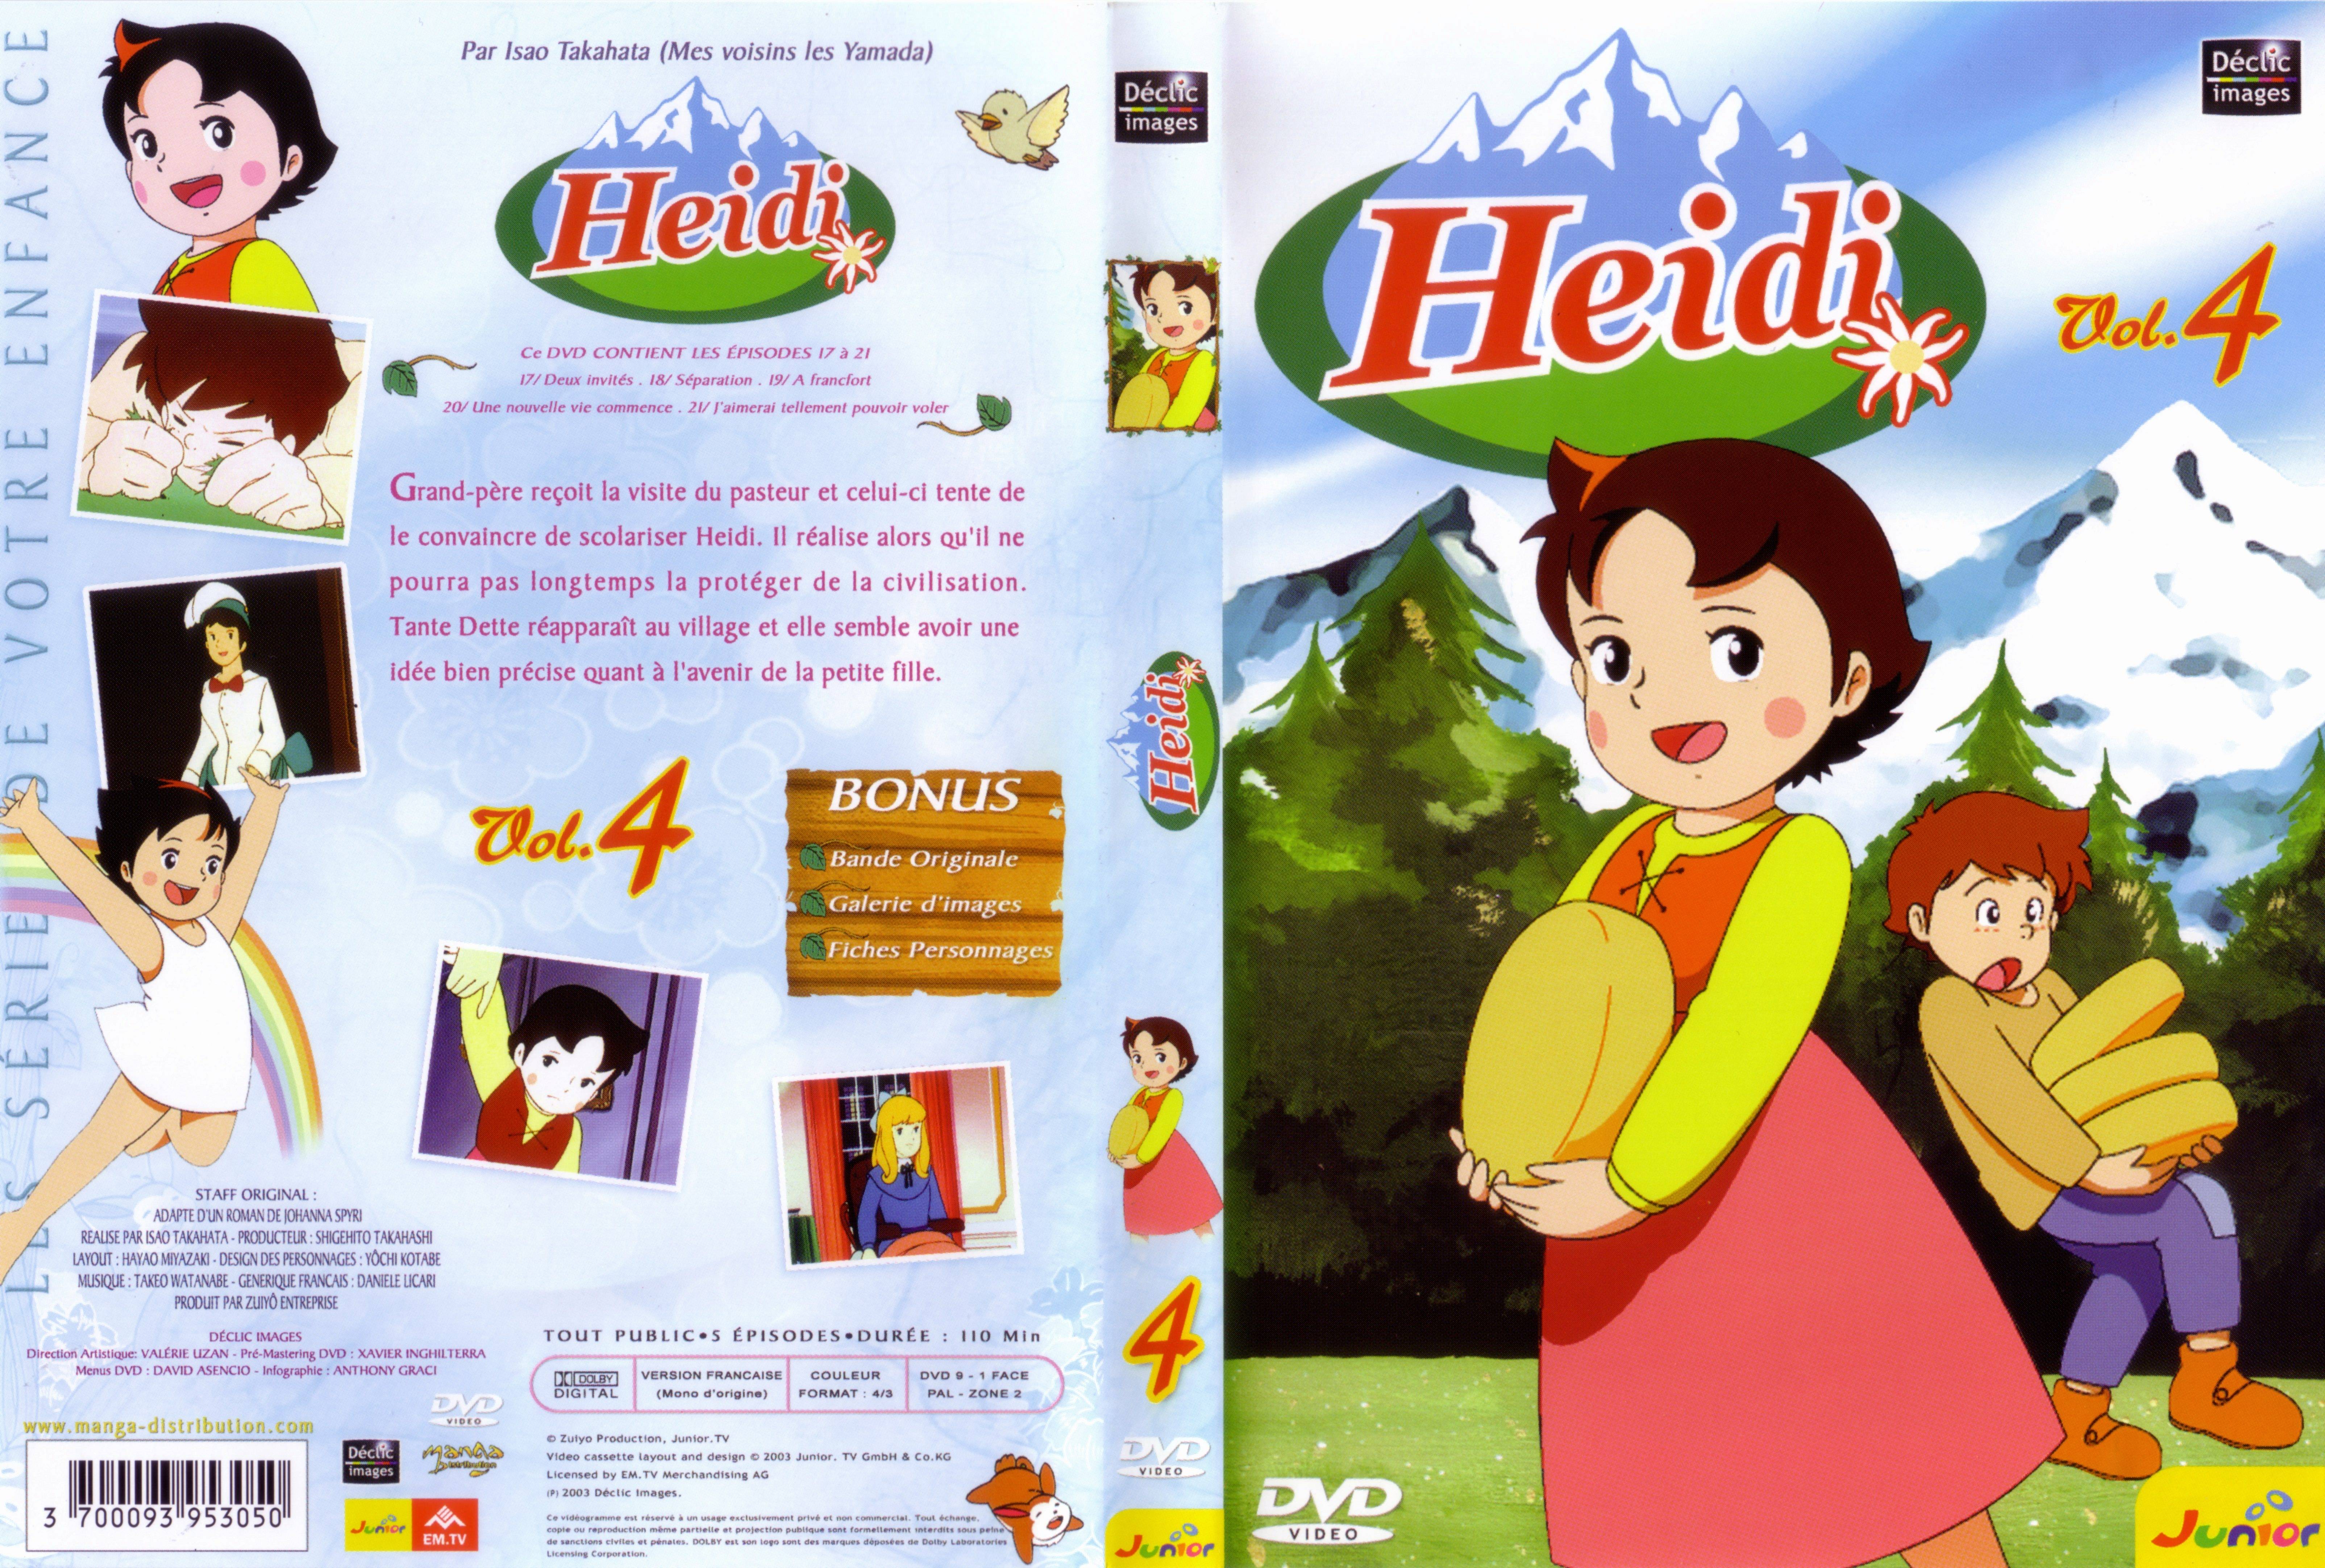 Jaquette DVD Heidi DVD 04